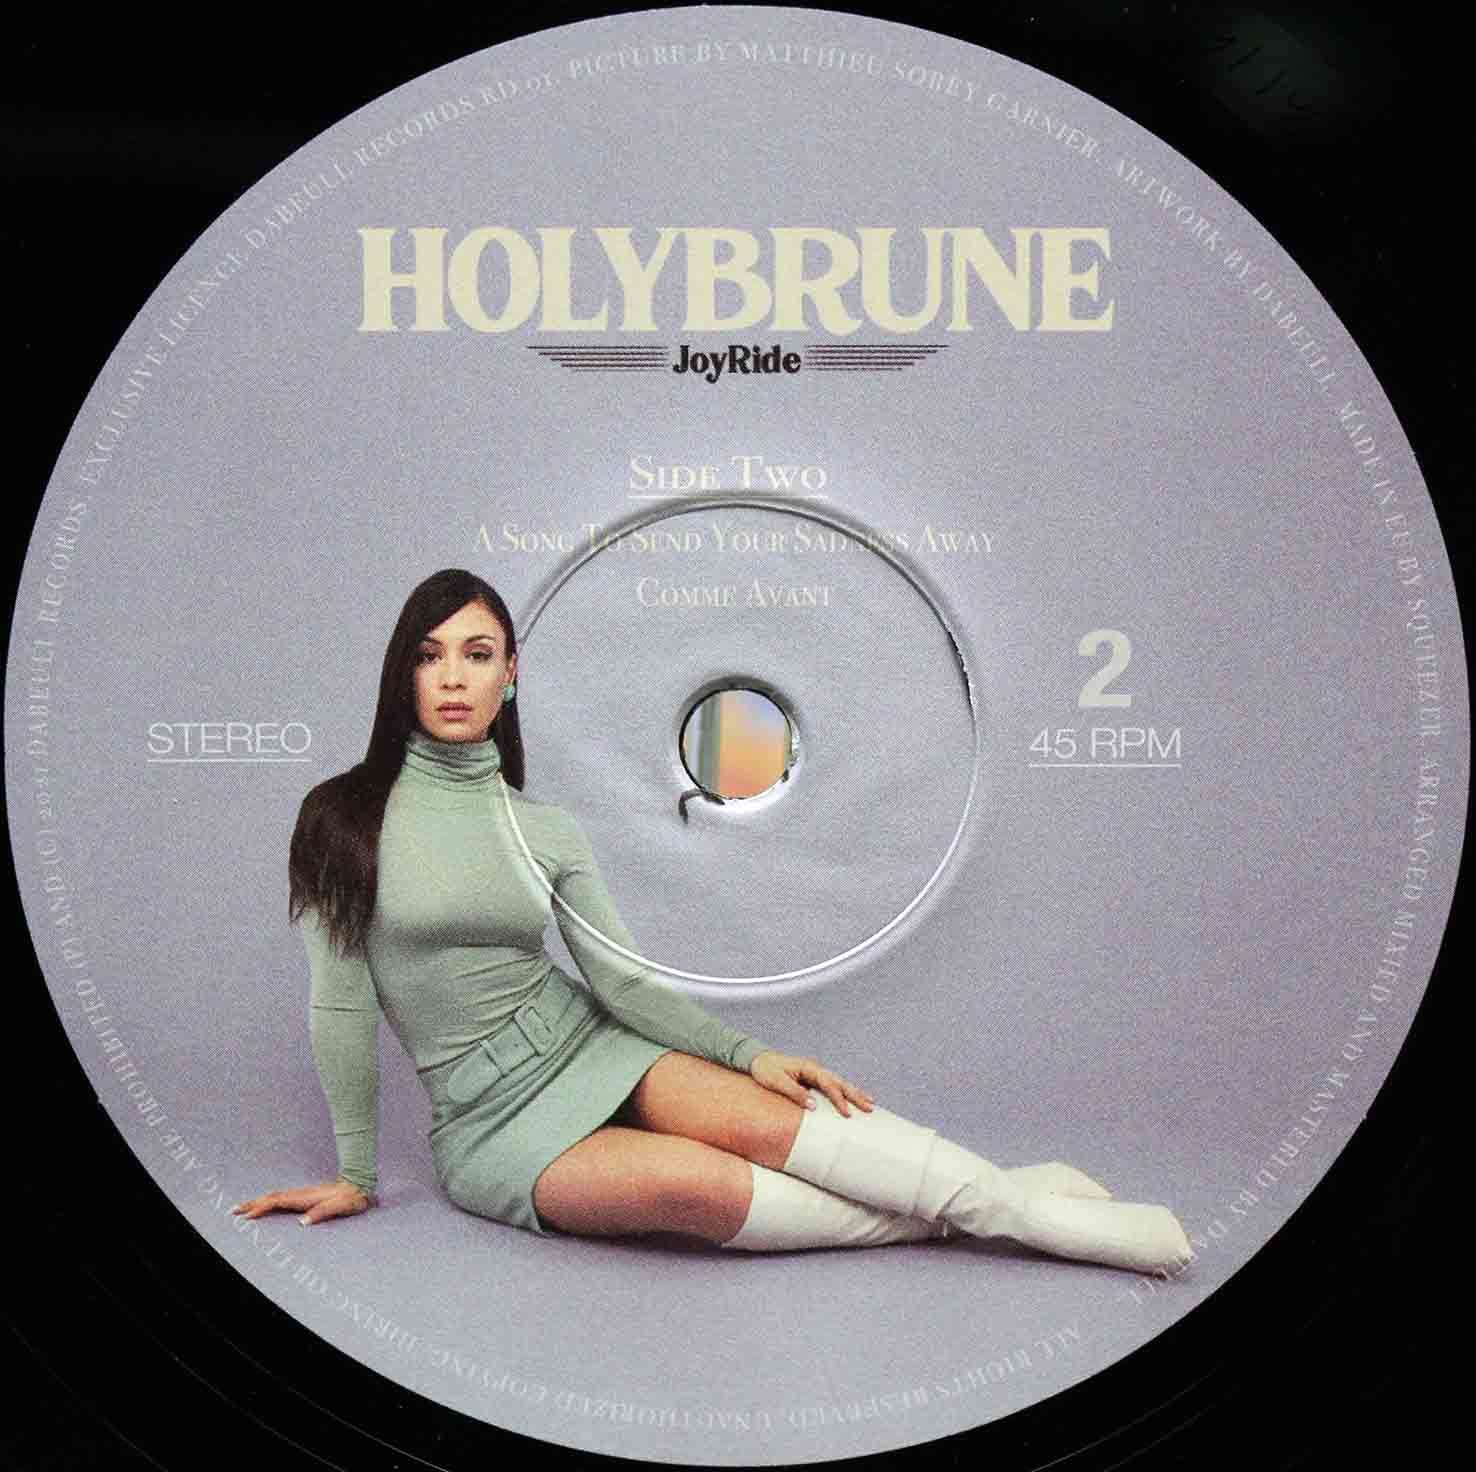 Holybrune – Joyride 04